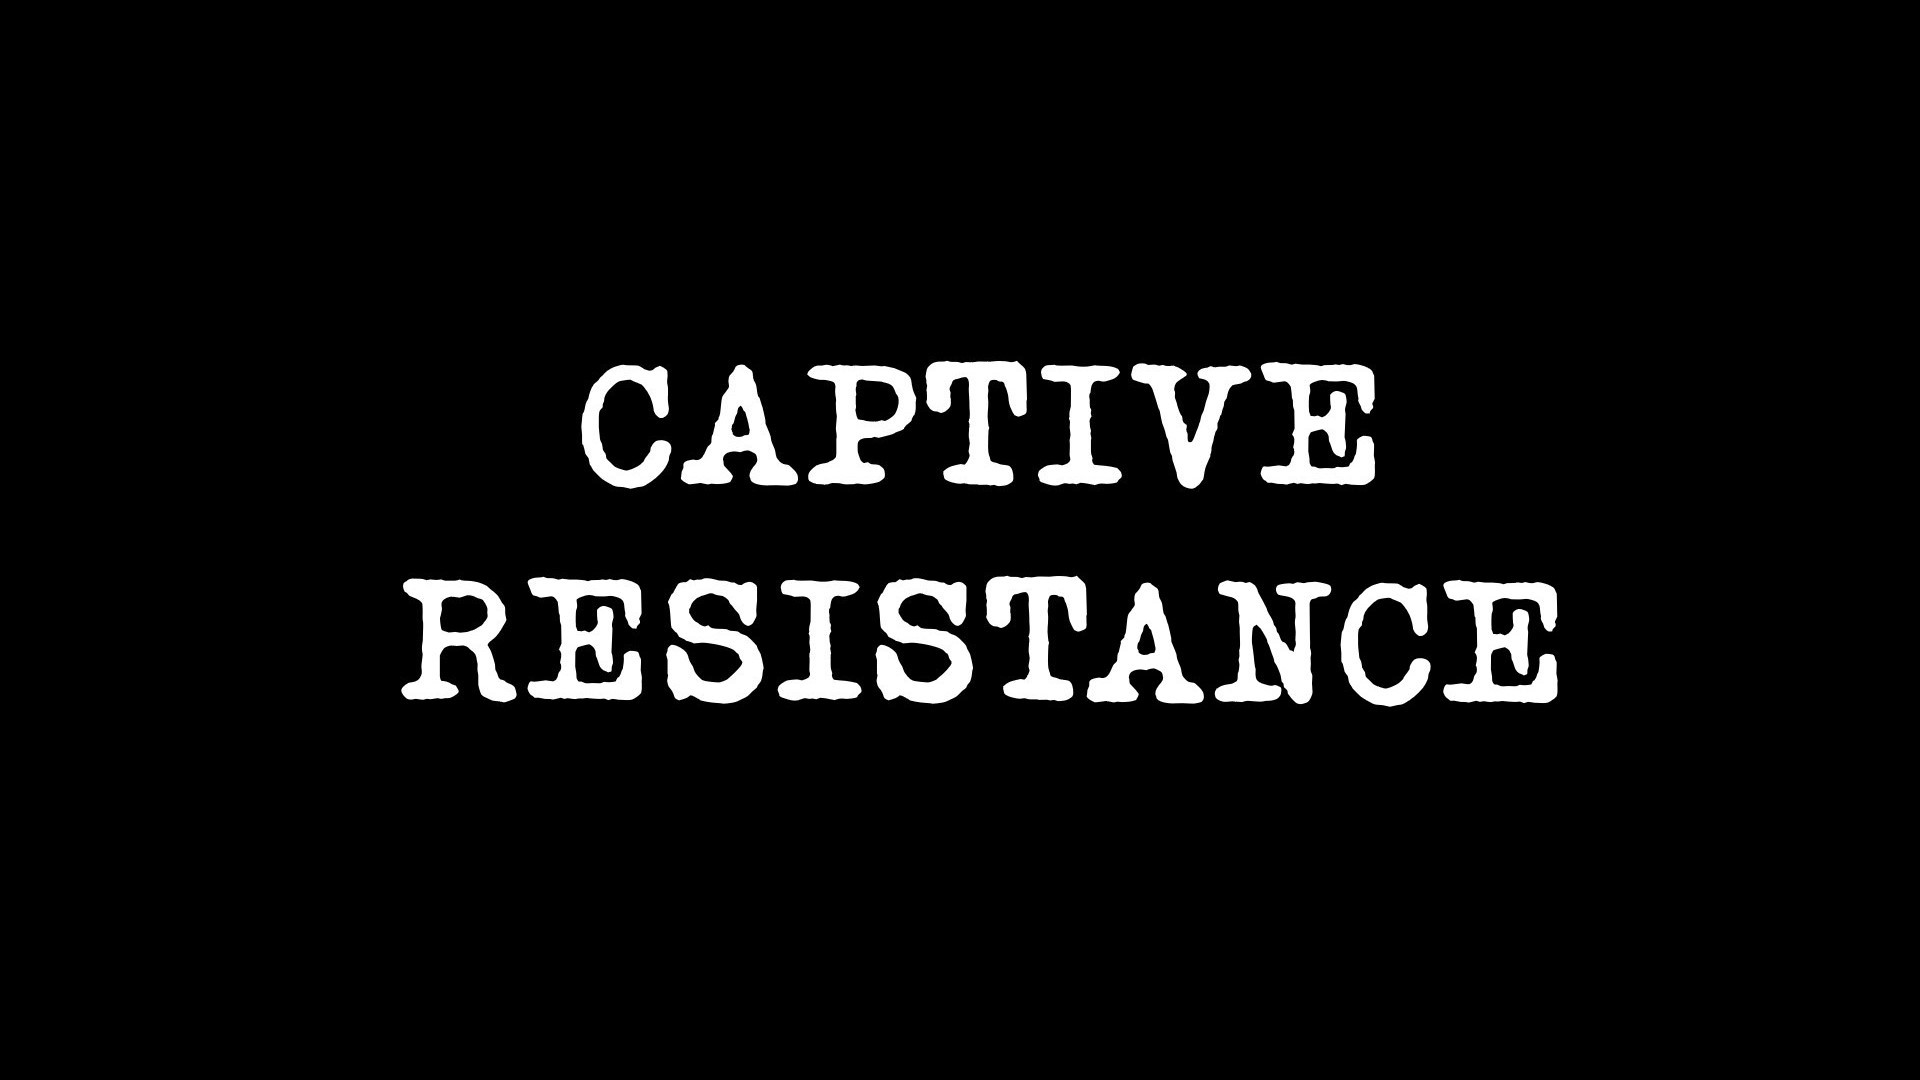 Captive Resistance (2020)